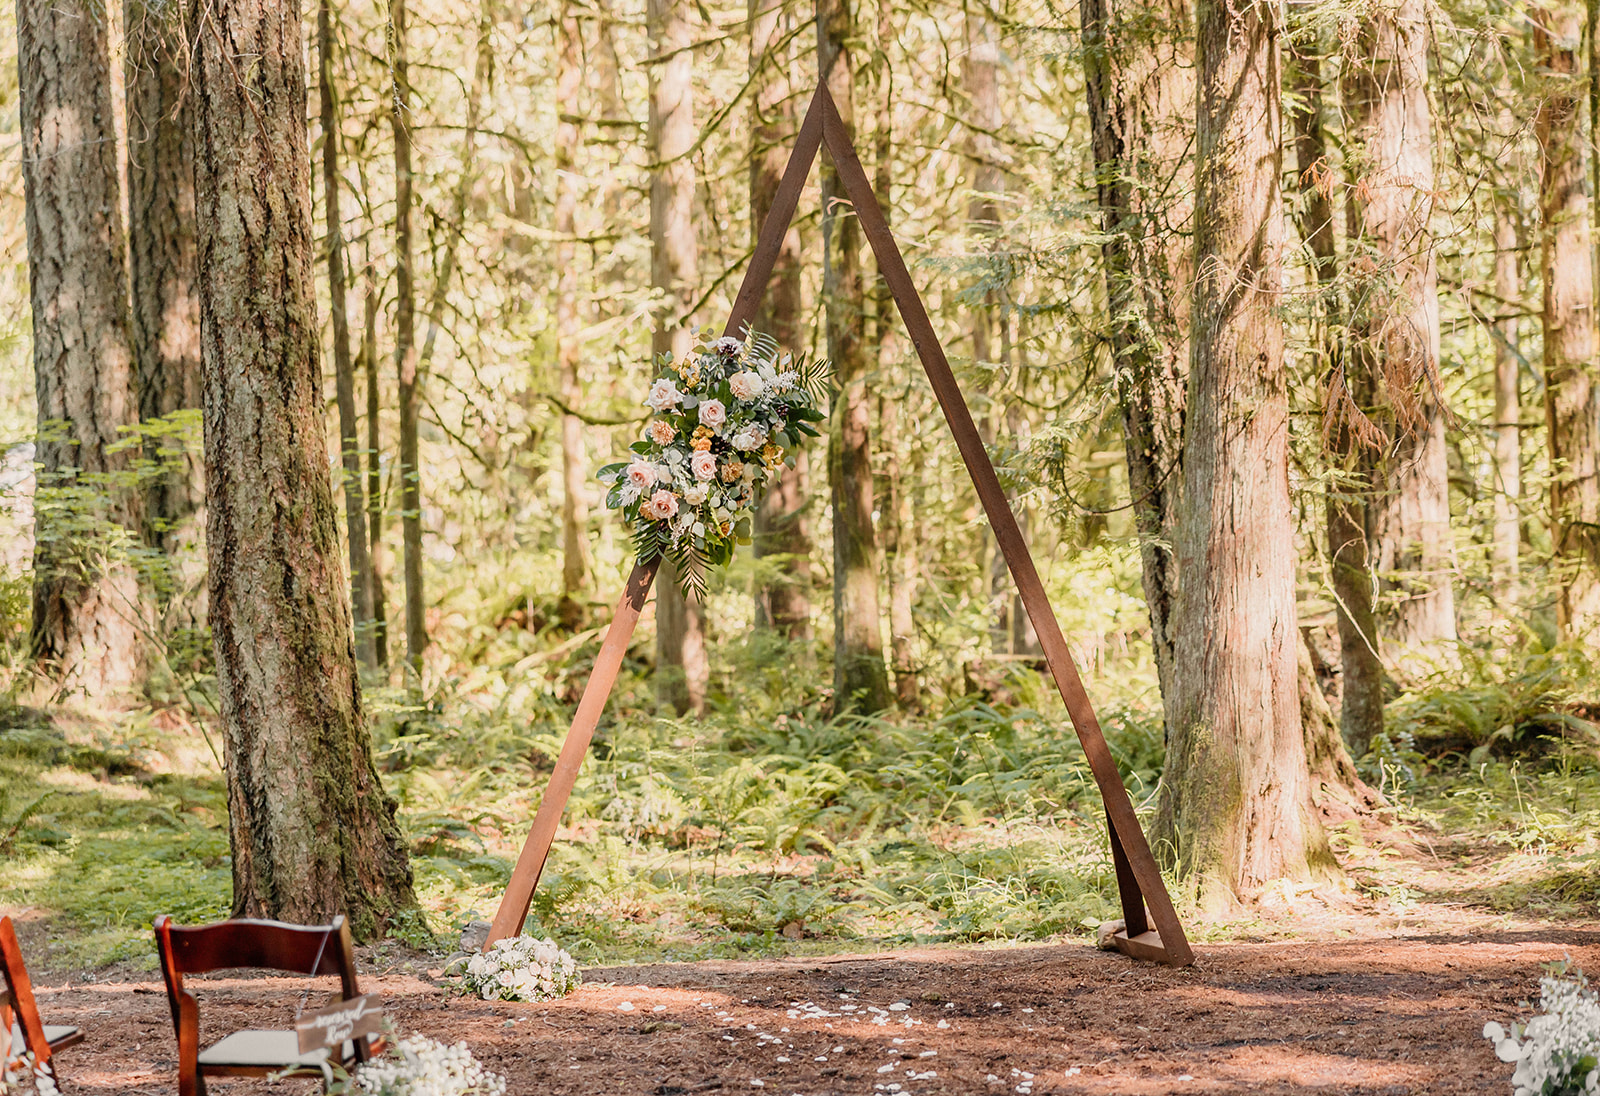 a bohemian wedding arch in the forest Camp Colton - A Mystical Oregon Wedding Venue